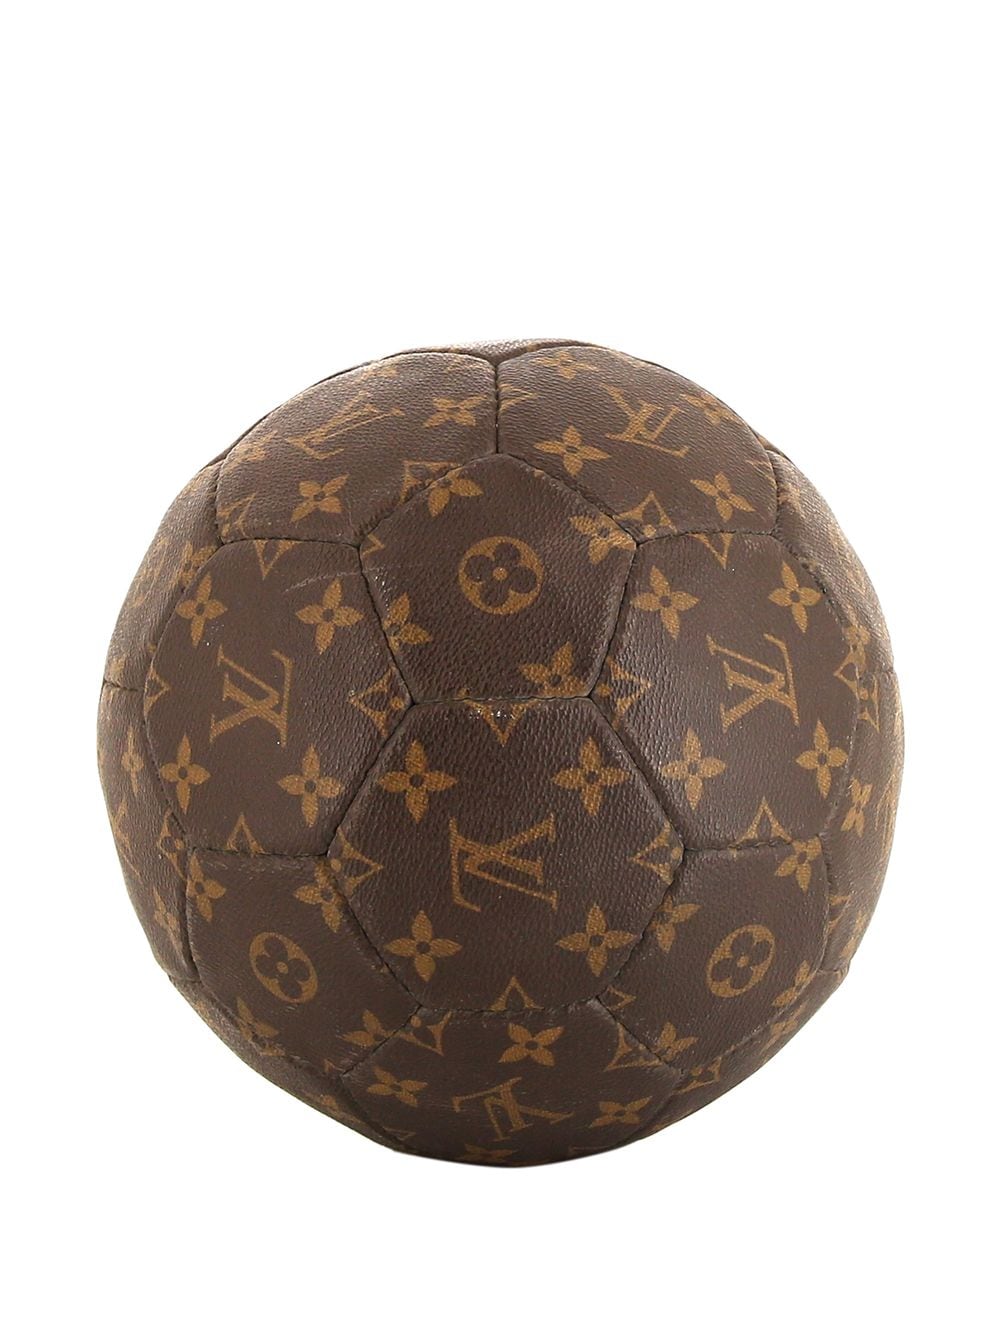 Louis Vuitton Monogram FIFA World Cup France Soccer Ball, 1998 (Very Good), Brown/Gold Womens Handbag